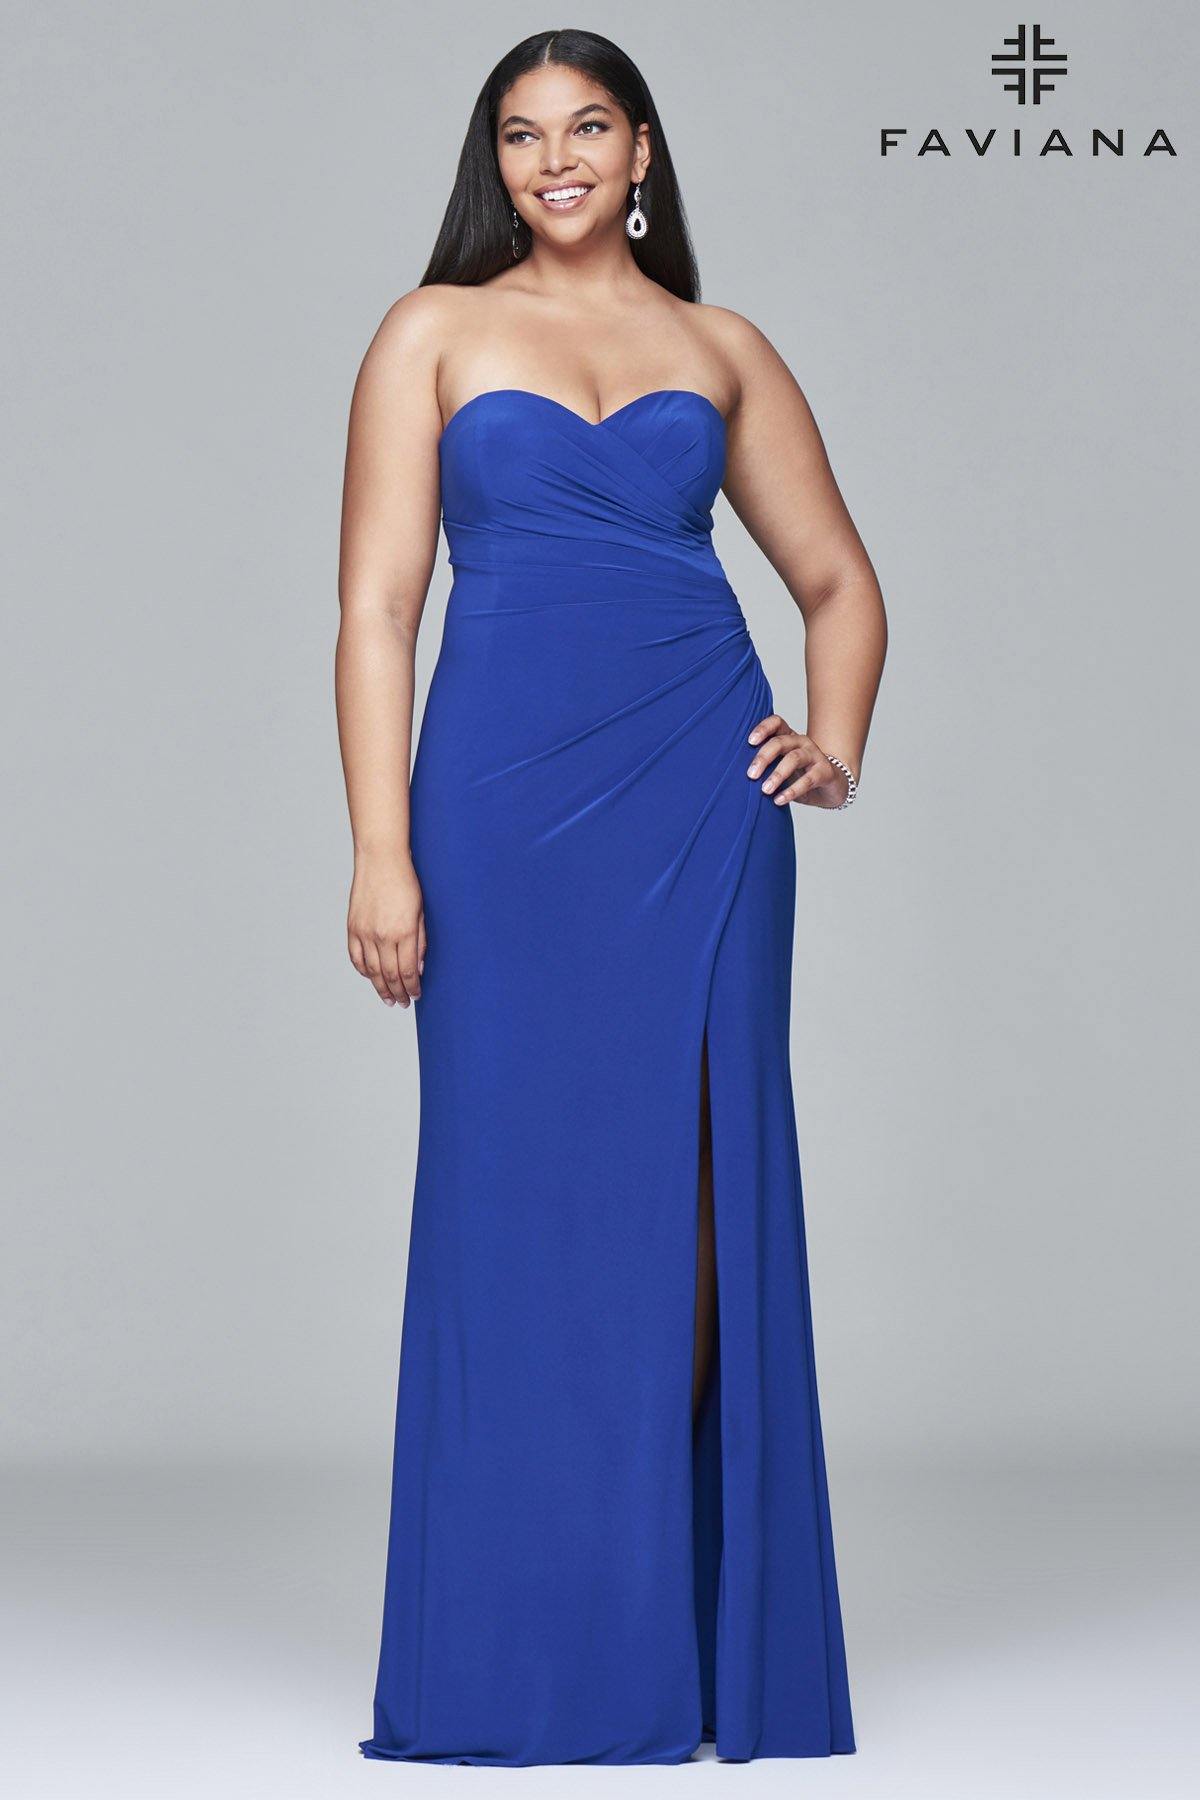 Faviana 9413 Long Strapless Plus Size Formal Dress - The Dress Outlet Faviana